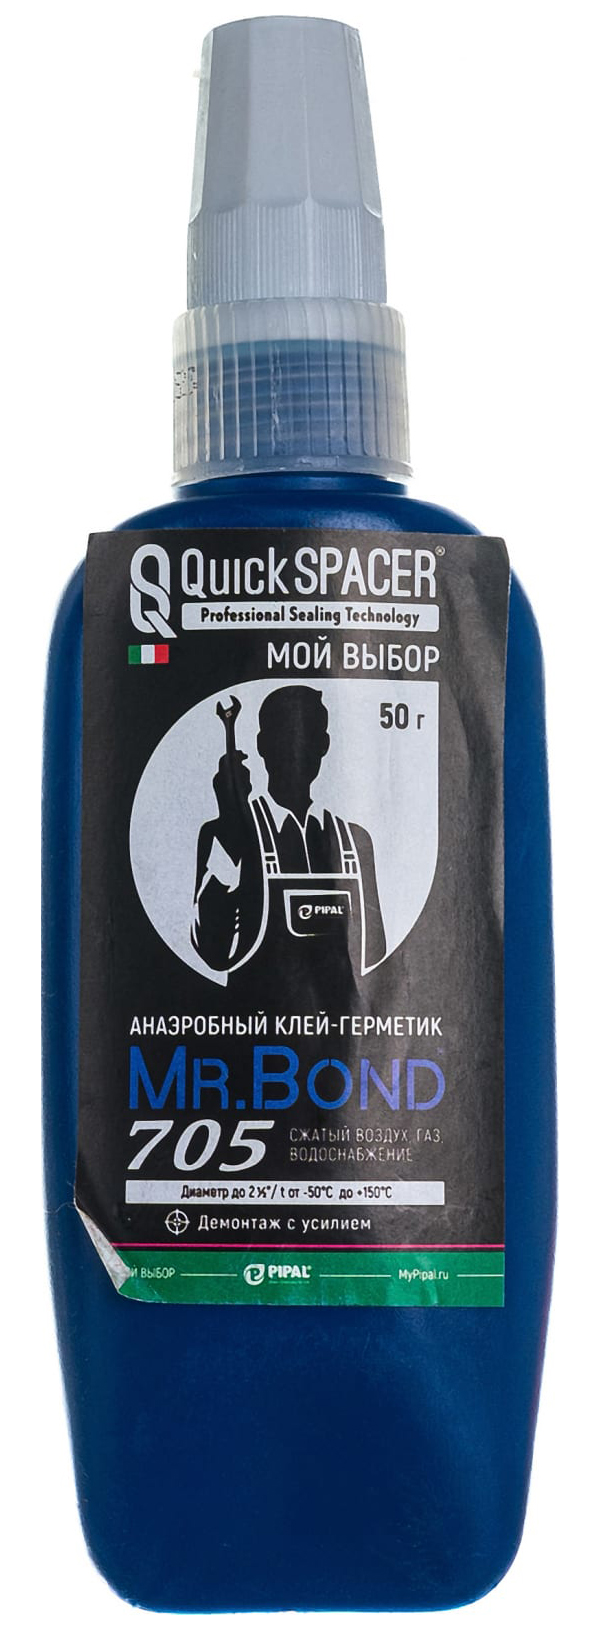 фото Mr.bond pipal quickspacer тиксотропный анаэробный герметик, быстрый демонтаж, белый, 100г